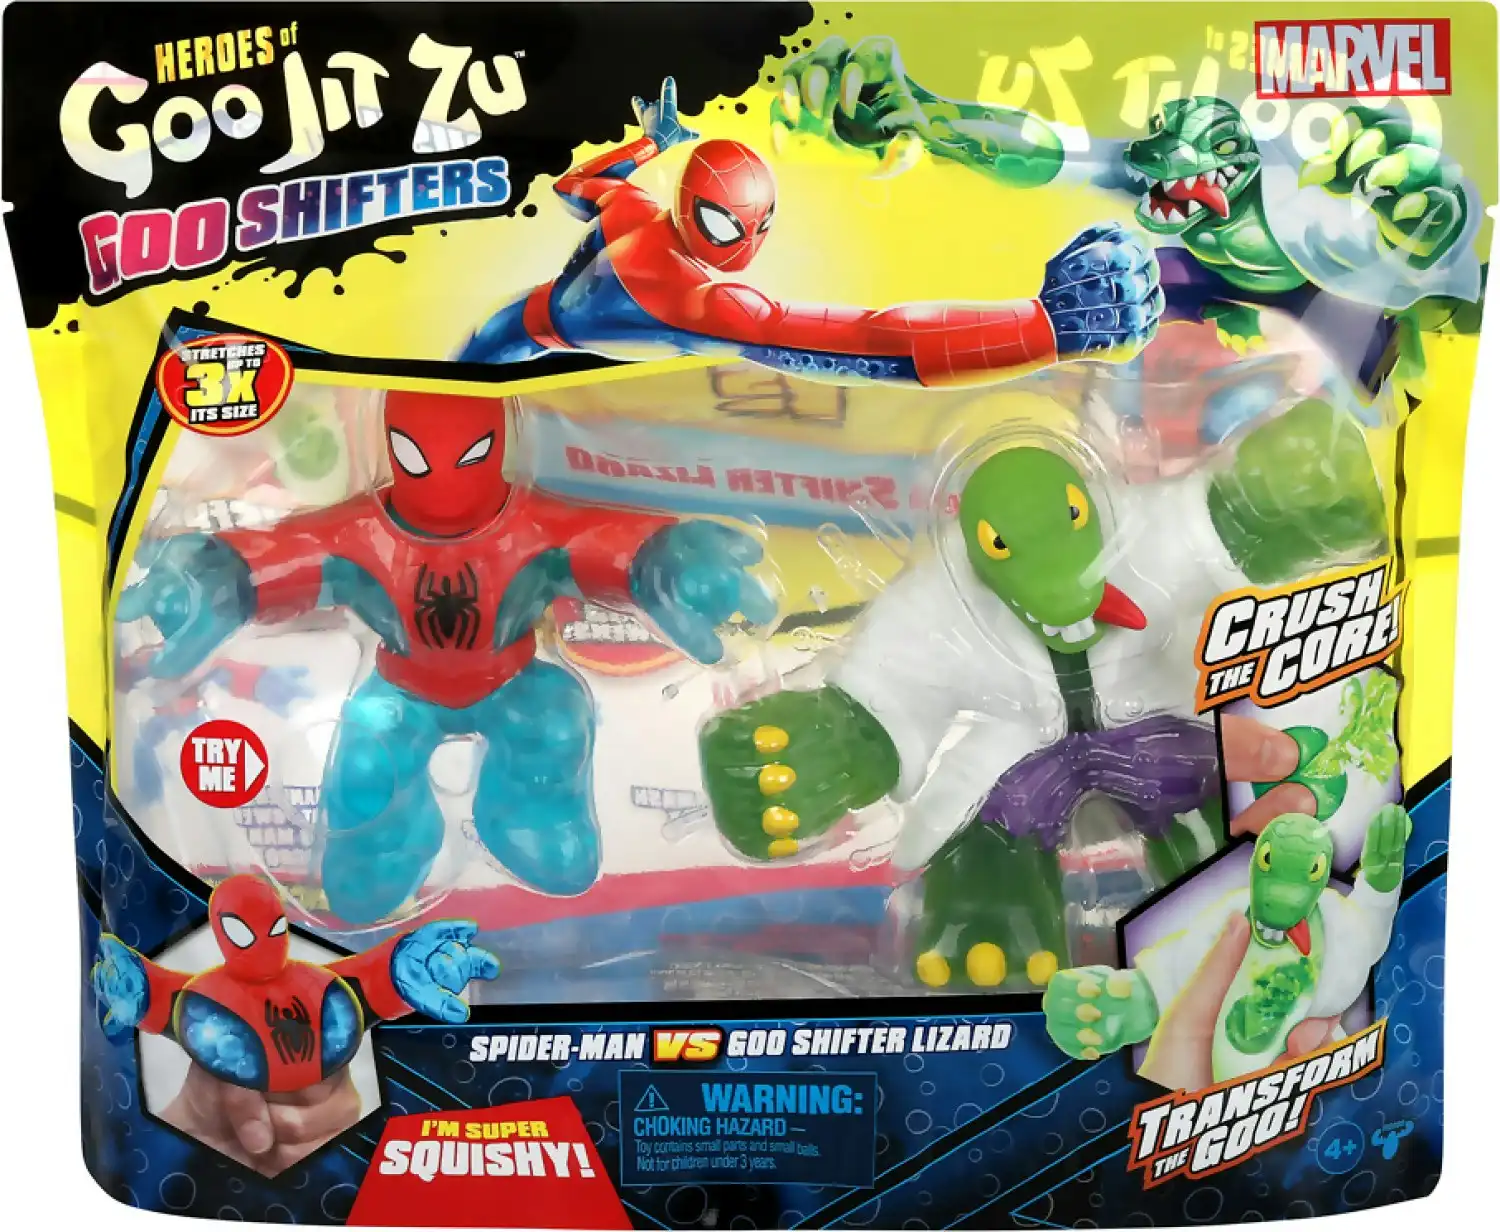 Heroes Of Goo Jit Zu - Marvel Goo Shifters Spider-man Vs Goo Shifter Lizard